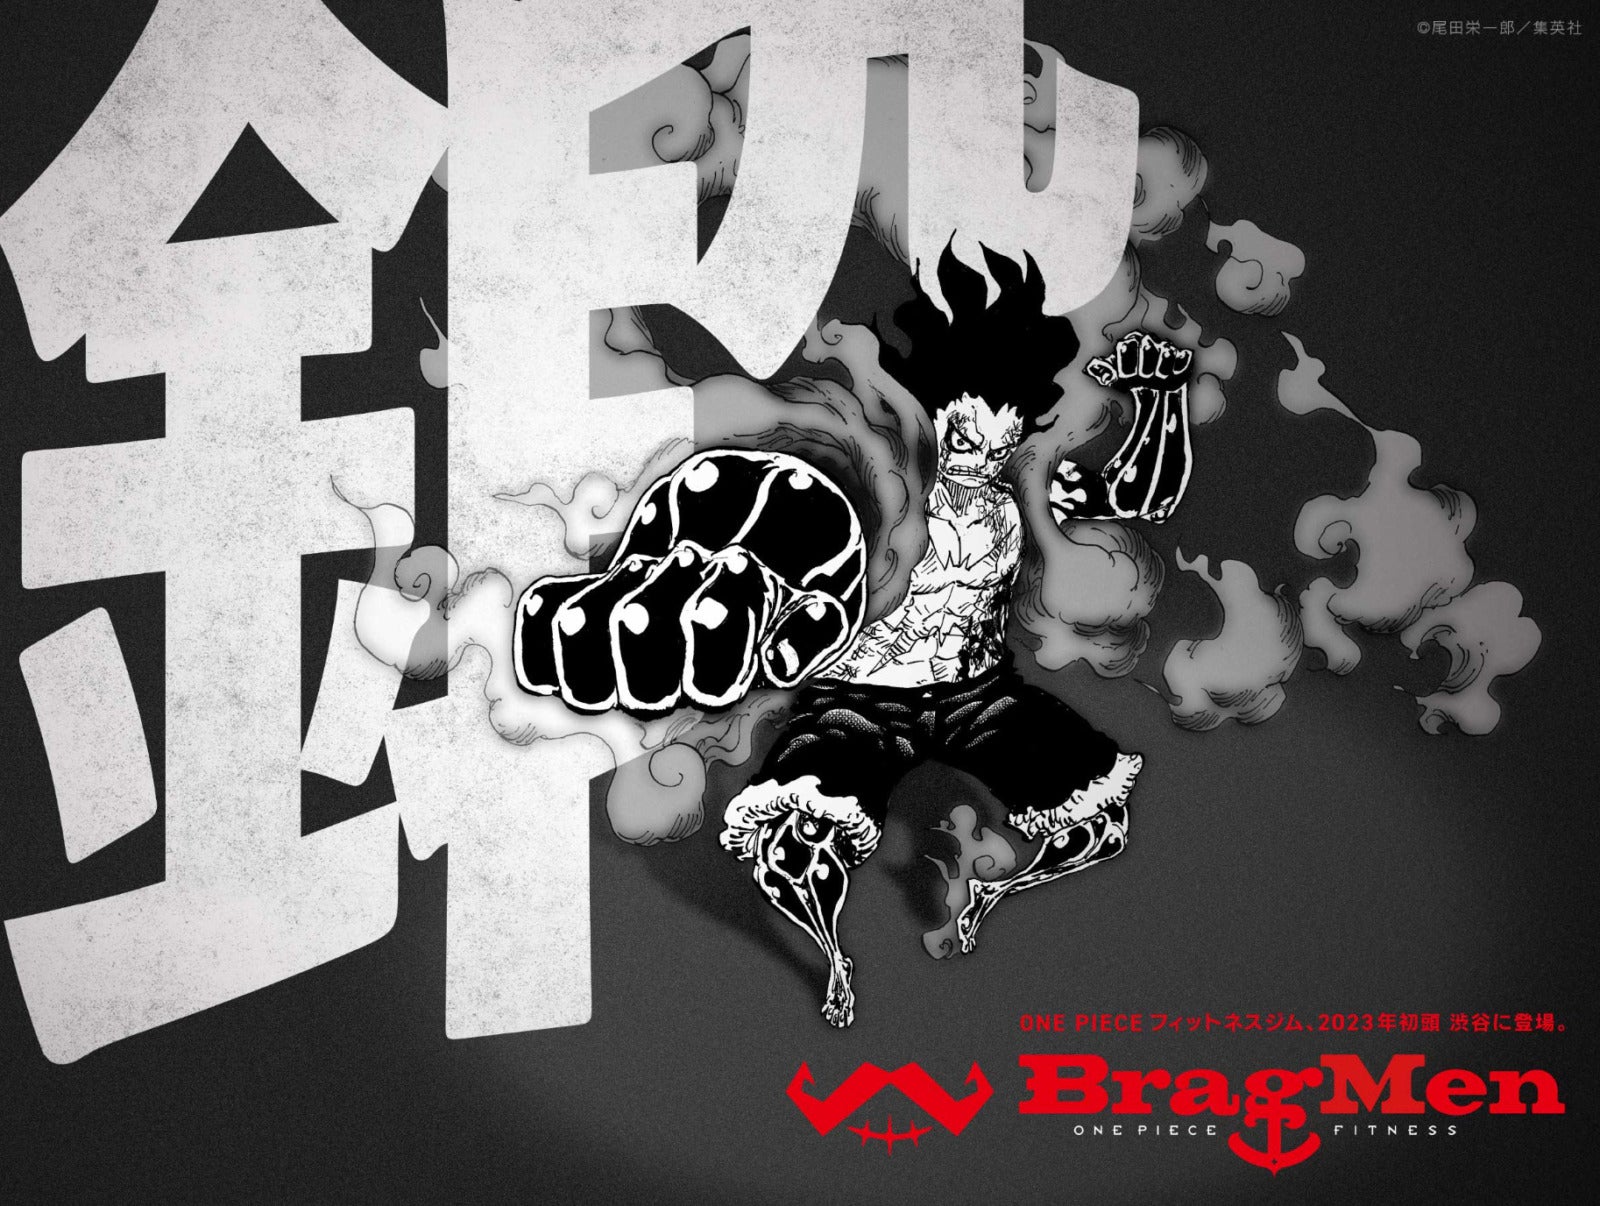 One Piece Fitness Bragmen ยิมวันพีซ ญี่ปุ่น